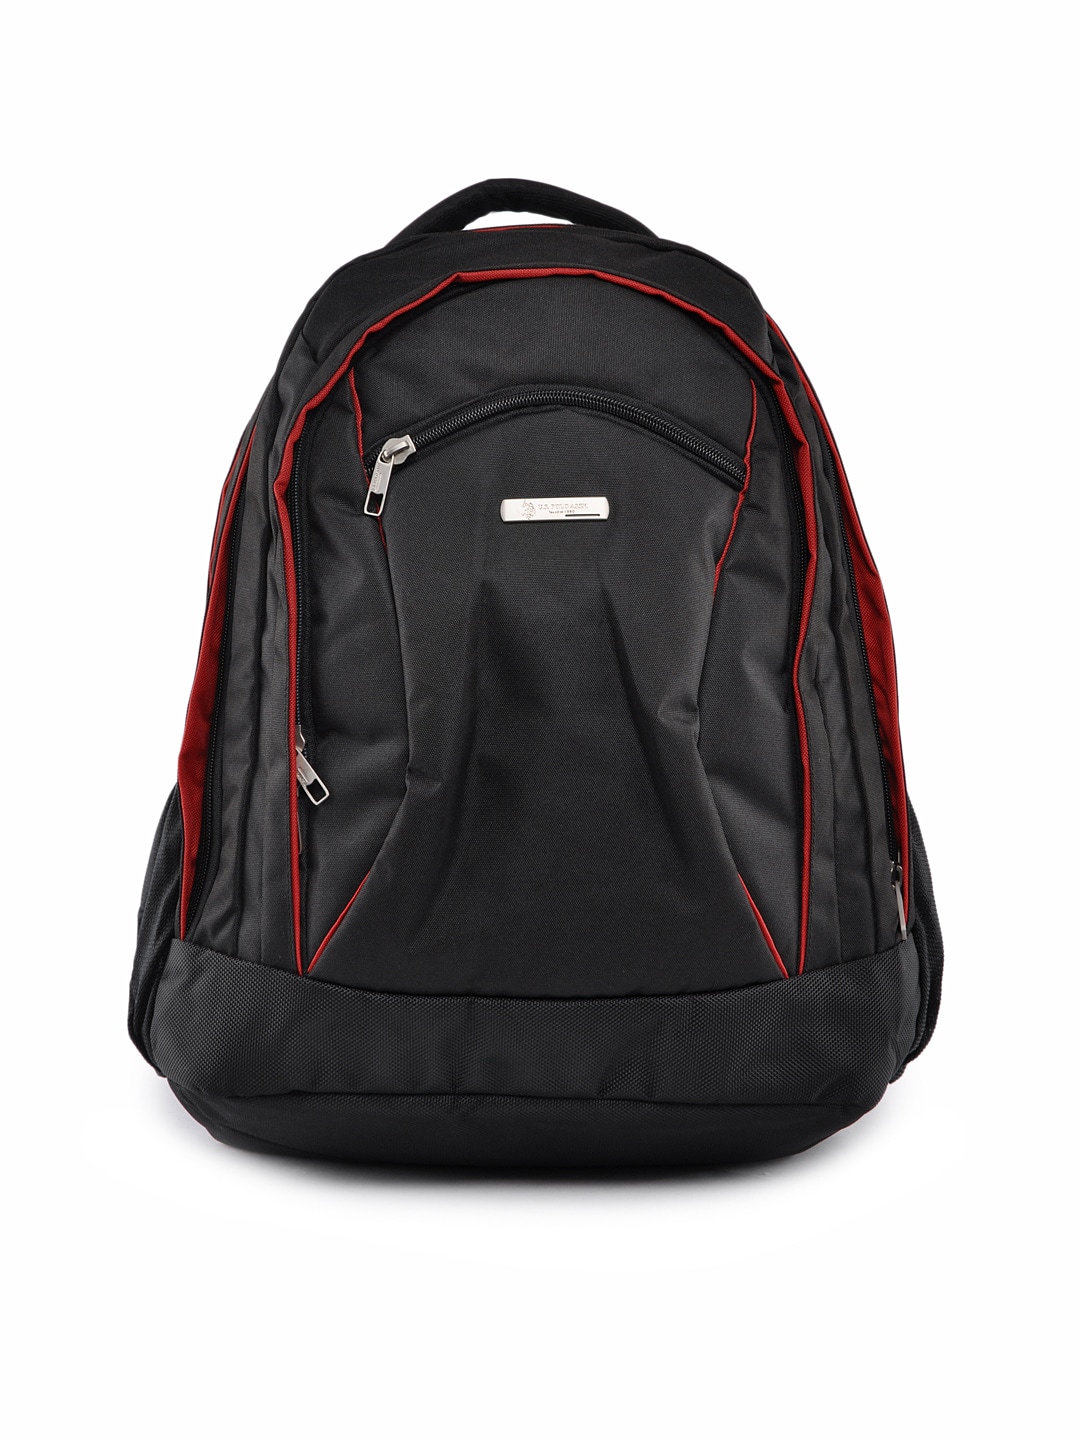 U.S. Polo Assn. Black Unisex Lug-Laptop Backpack